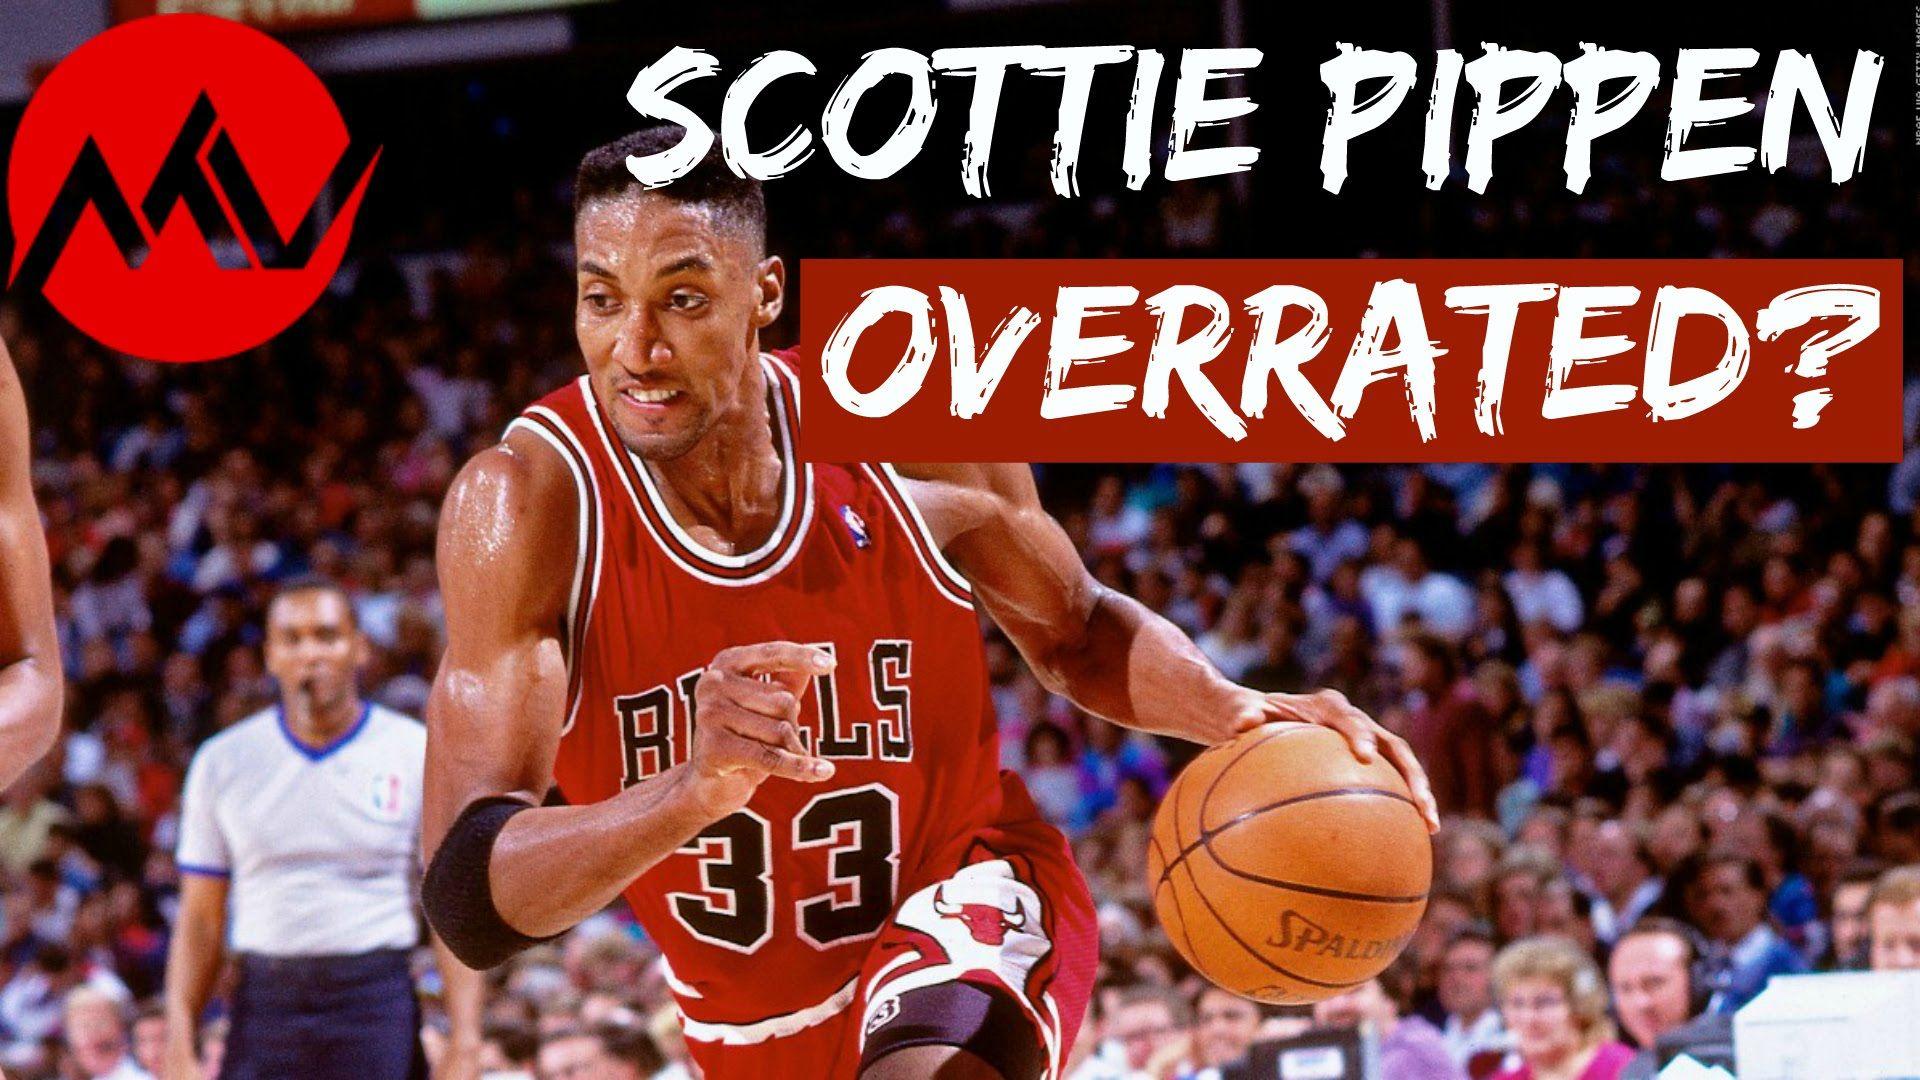 Scottie Pippen is Overrated